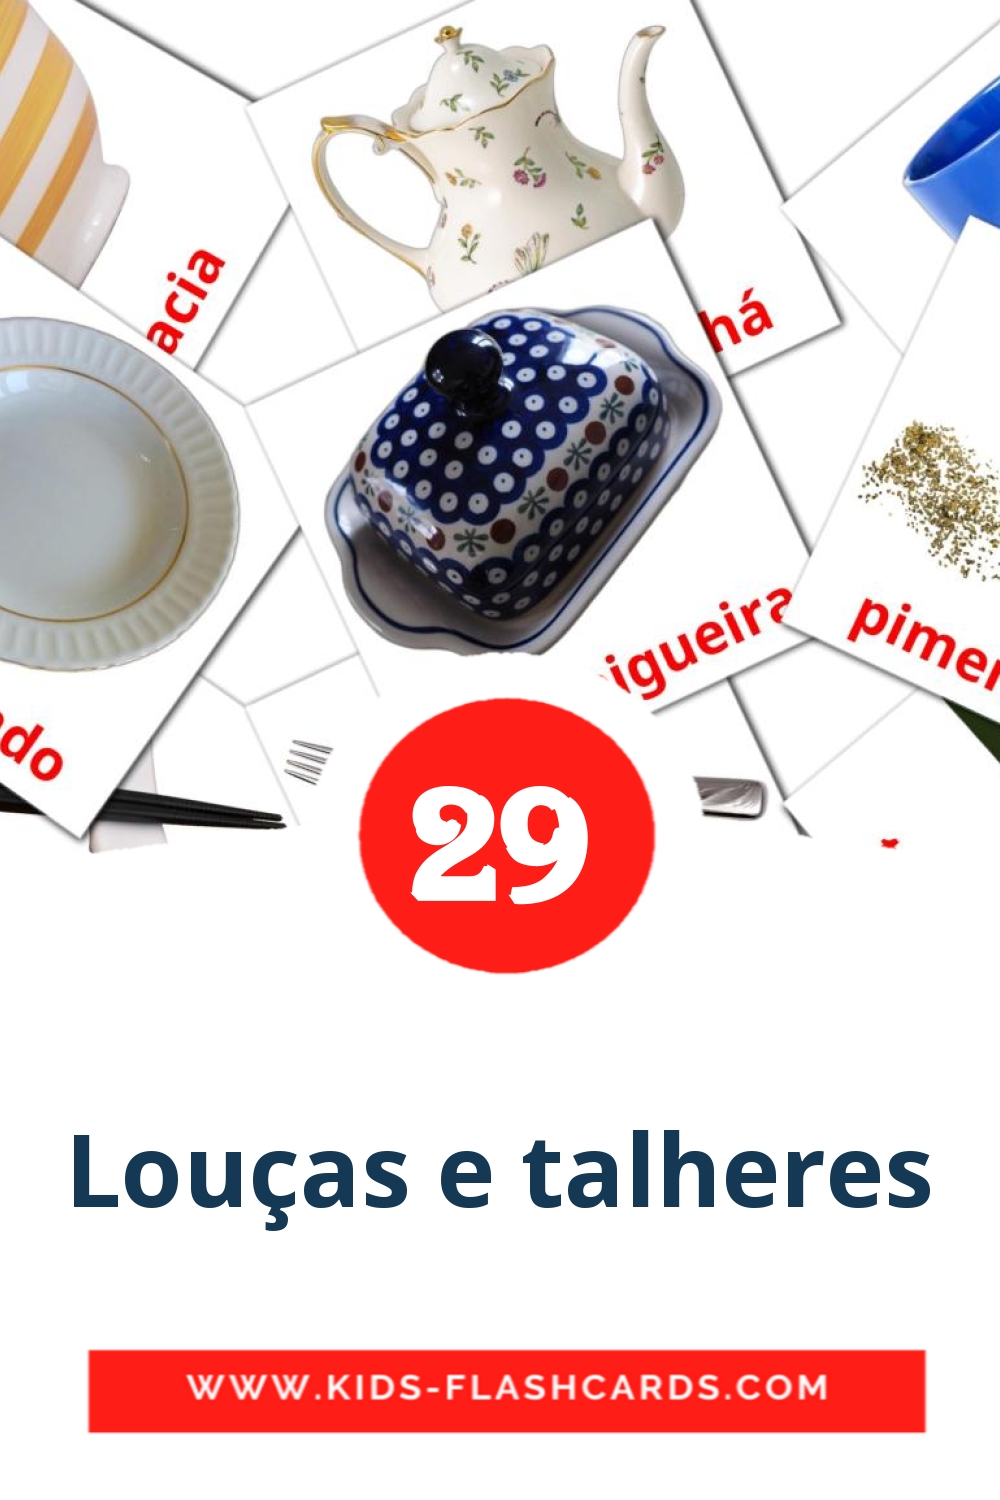 29 tarjetas didacticas de Louças e talheres para el jardín de infancia en portugués